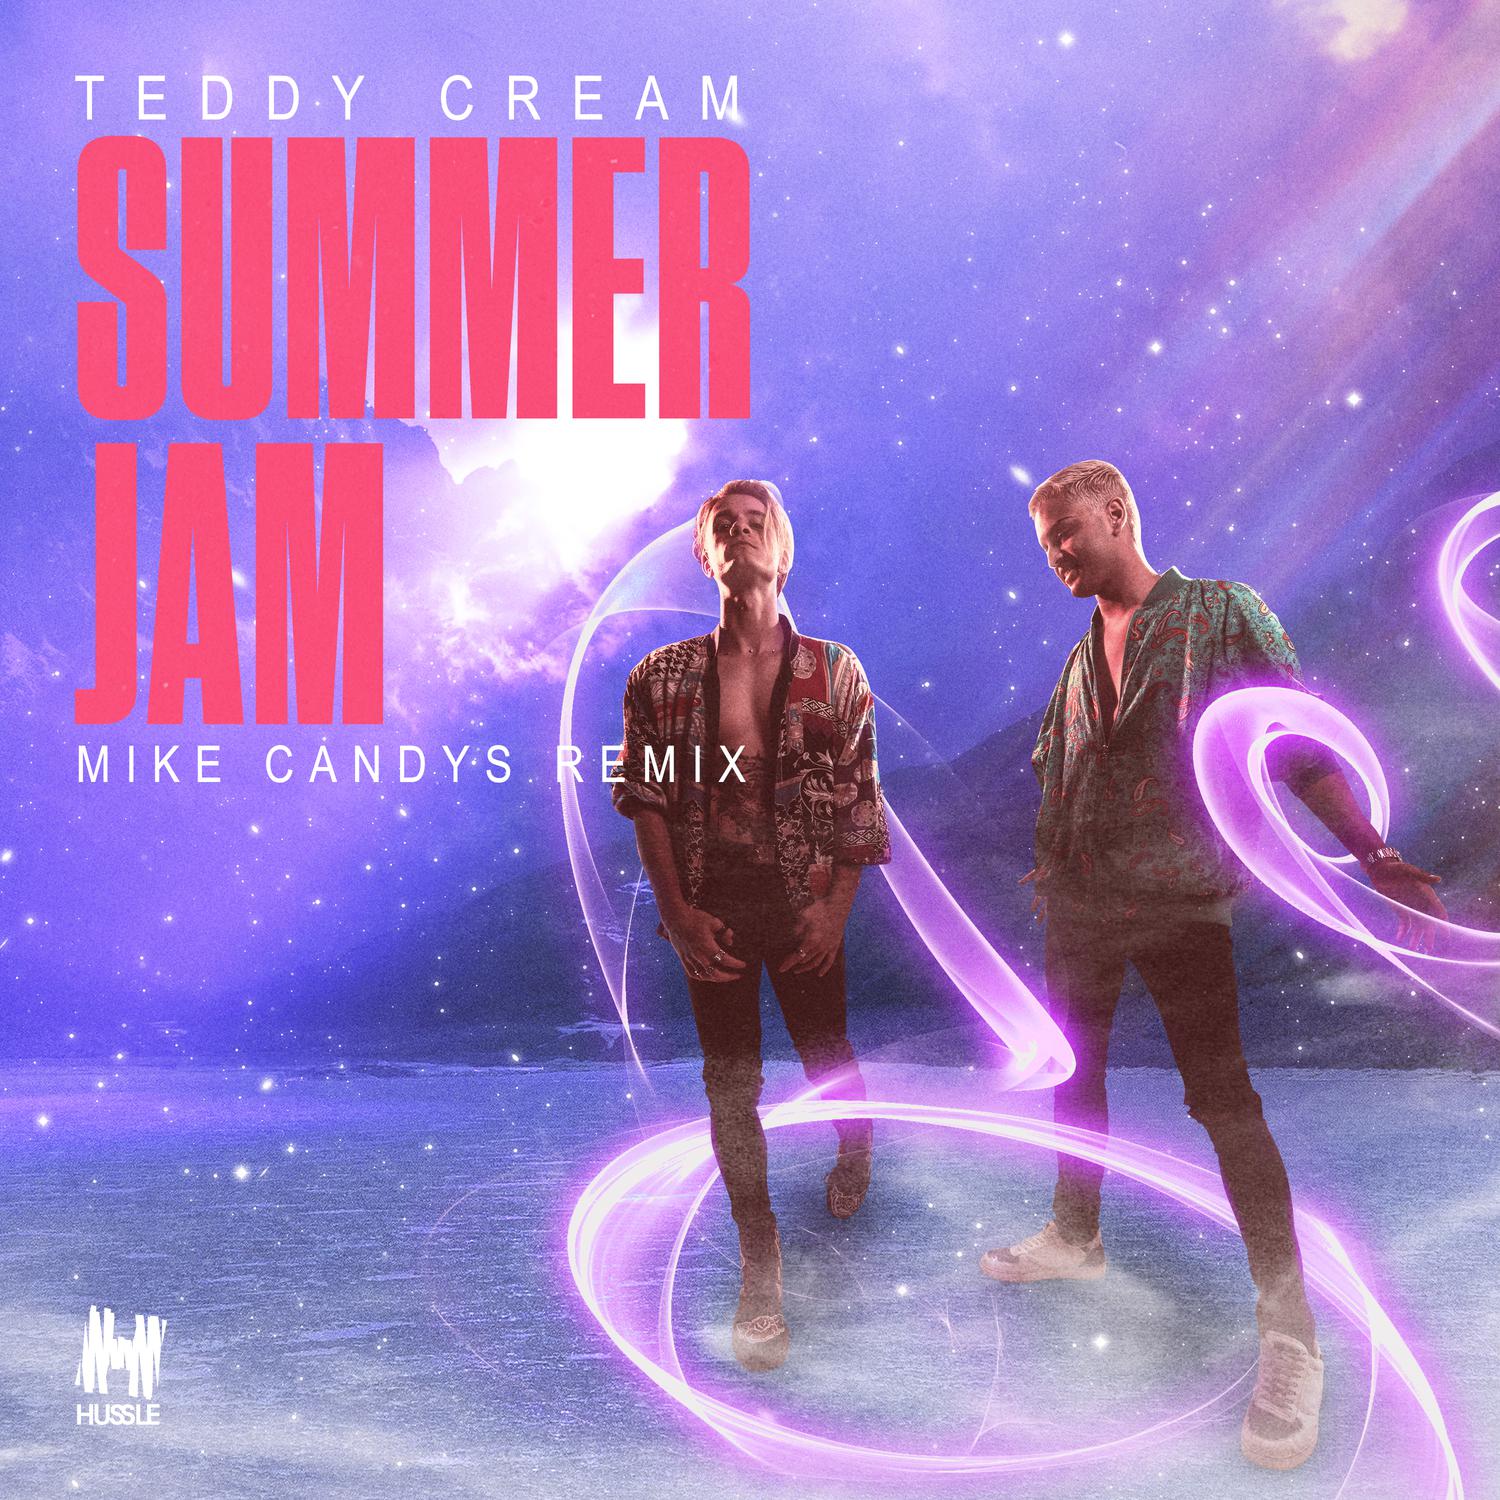 Teddy Cream - Summer Jam (Mike Candys Remix)